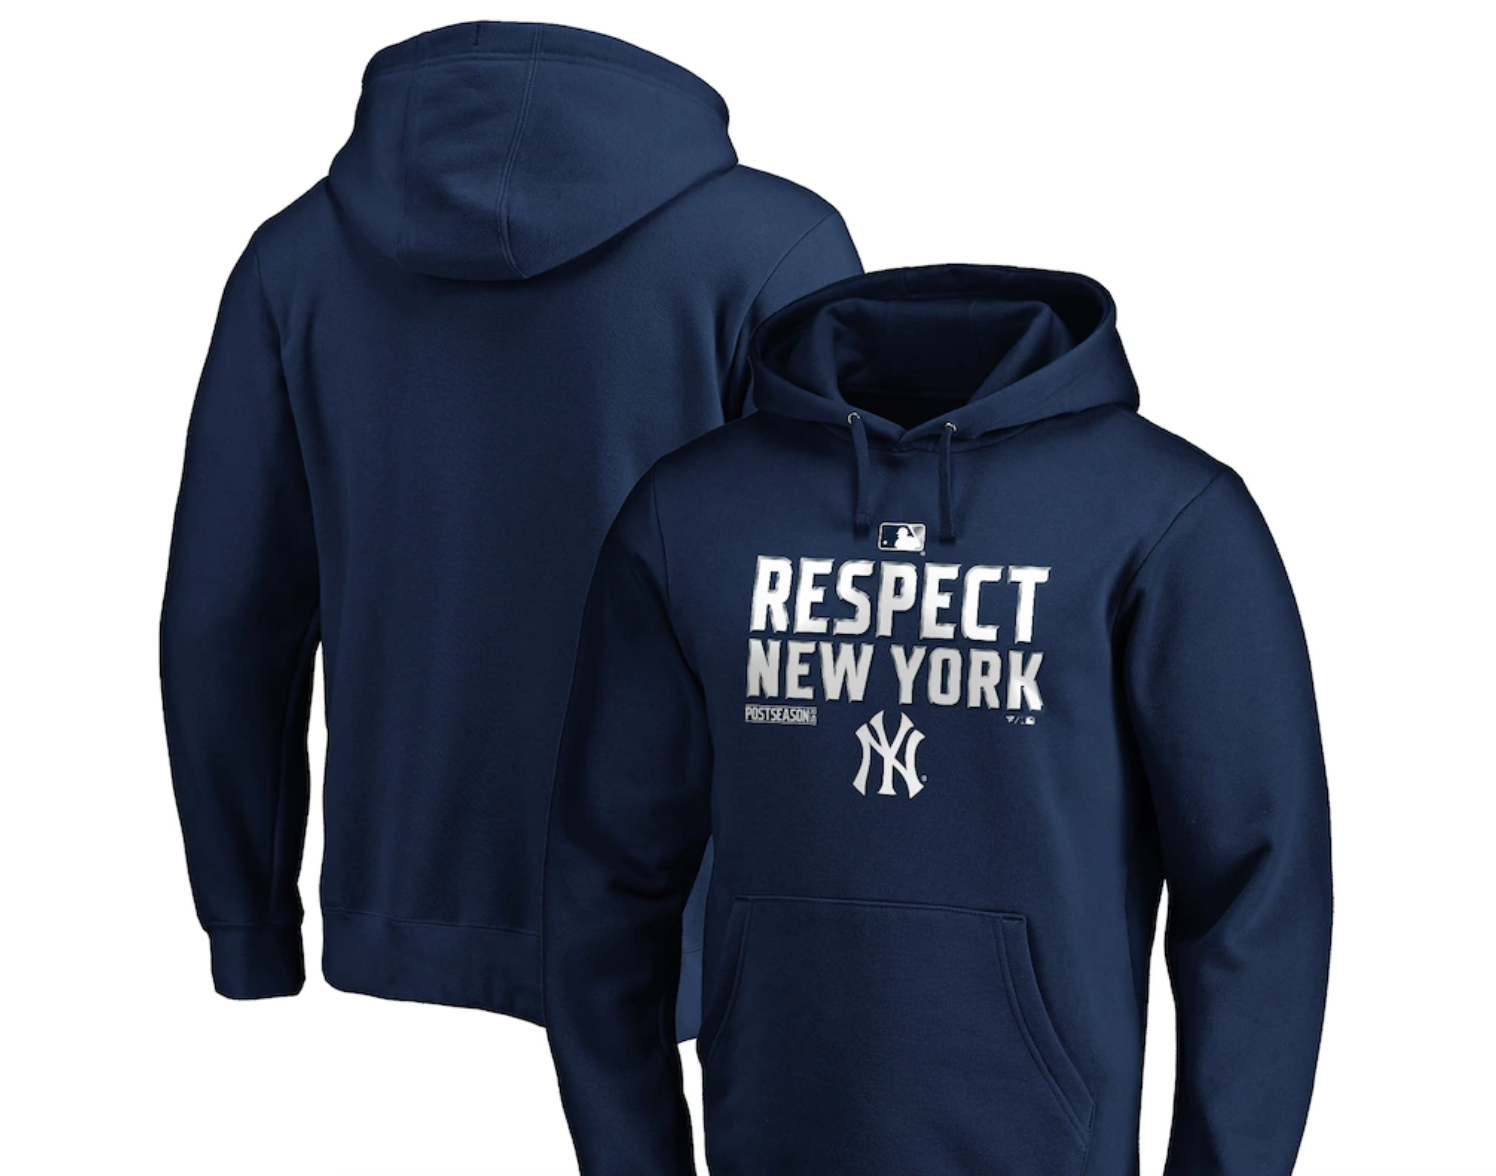 New York Yankees 2020 Postseason hats, shirts are here